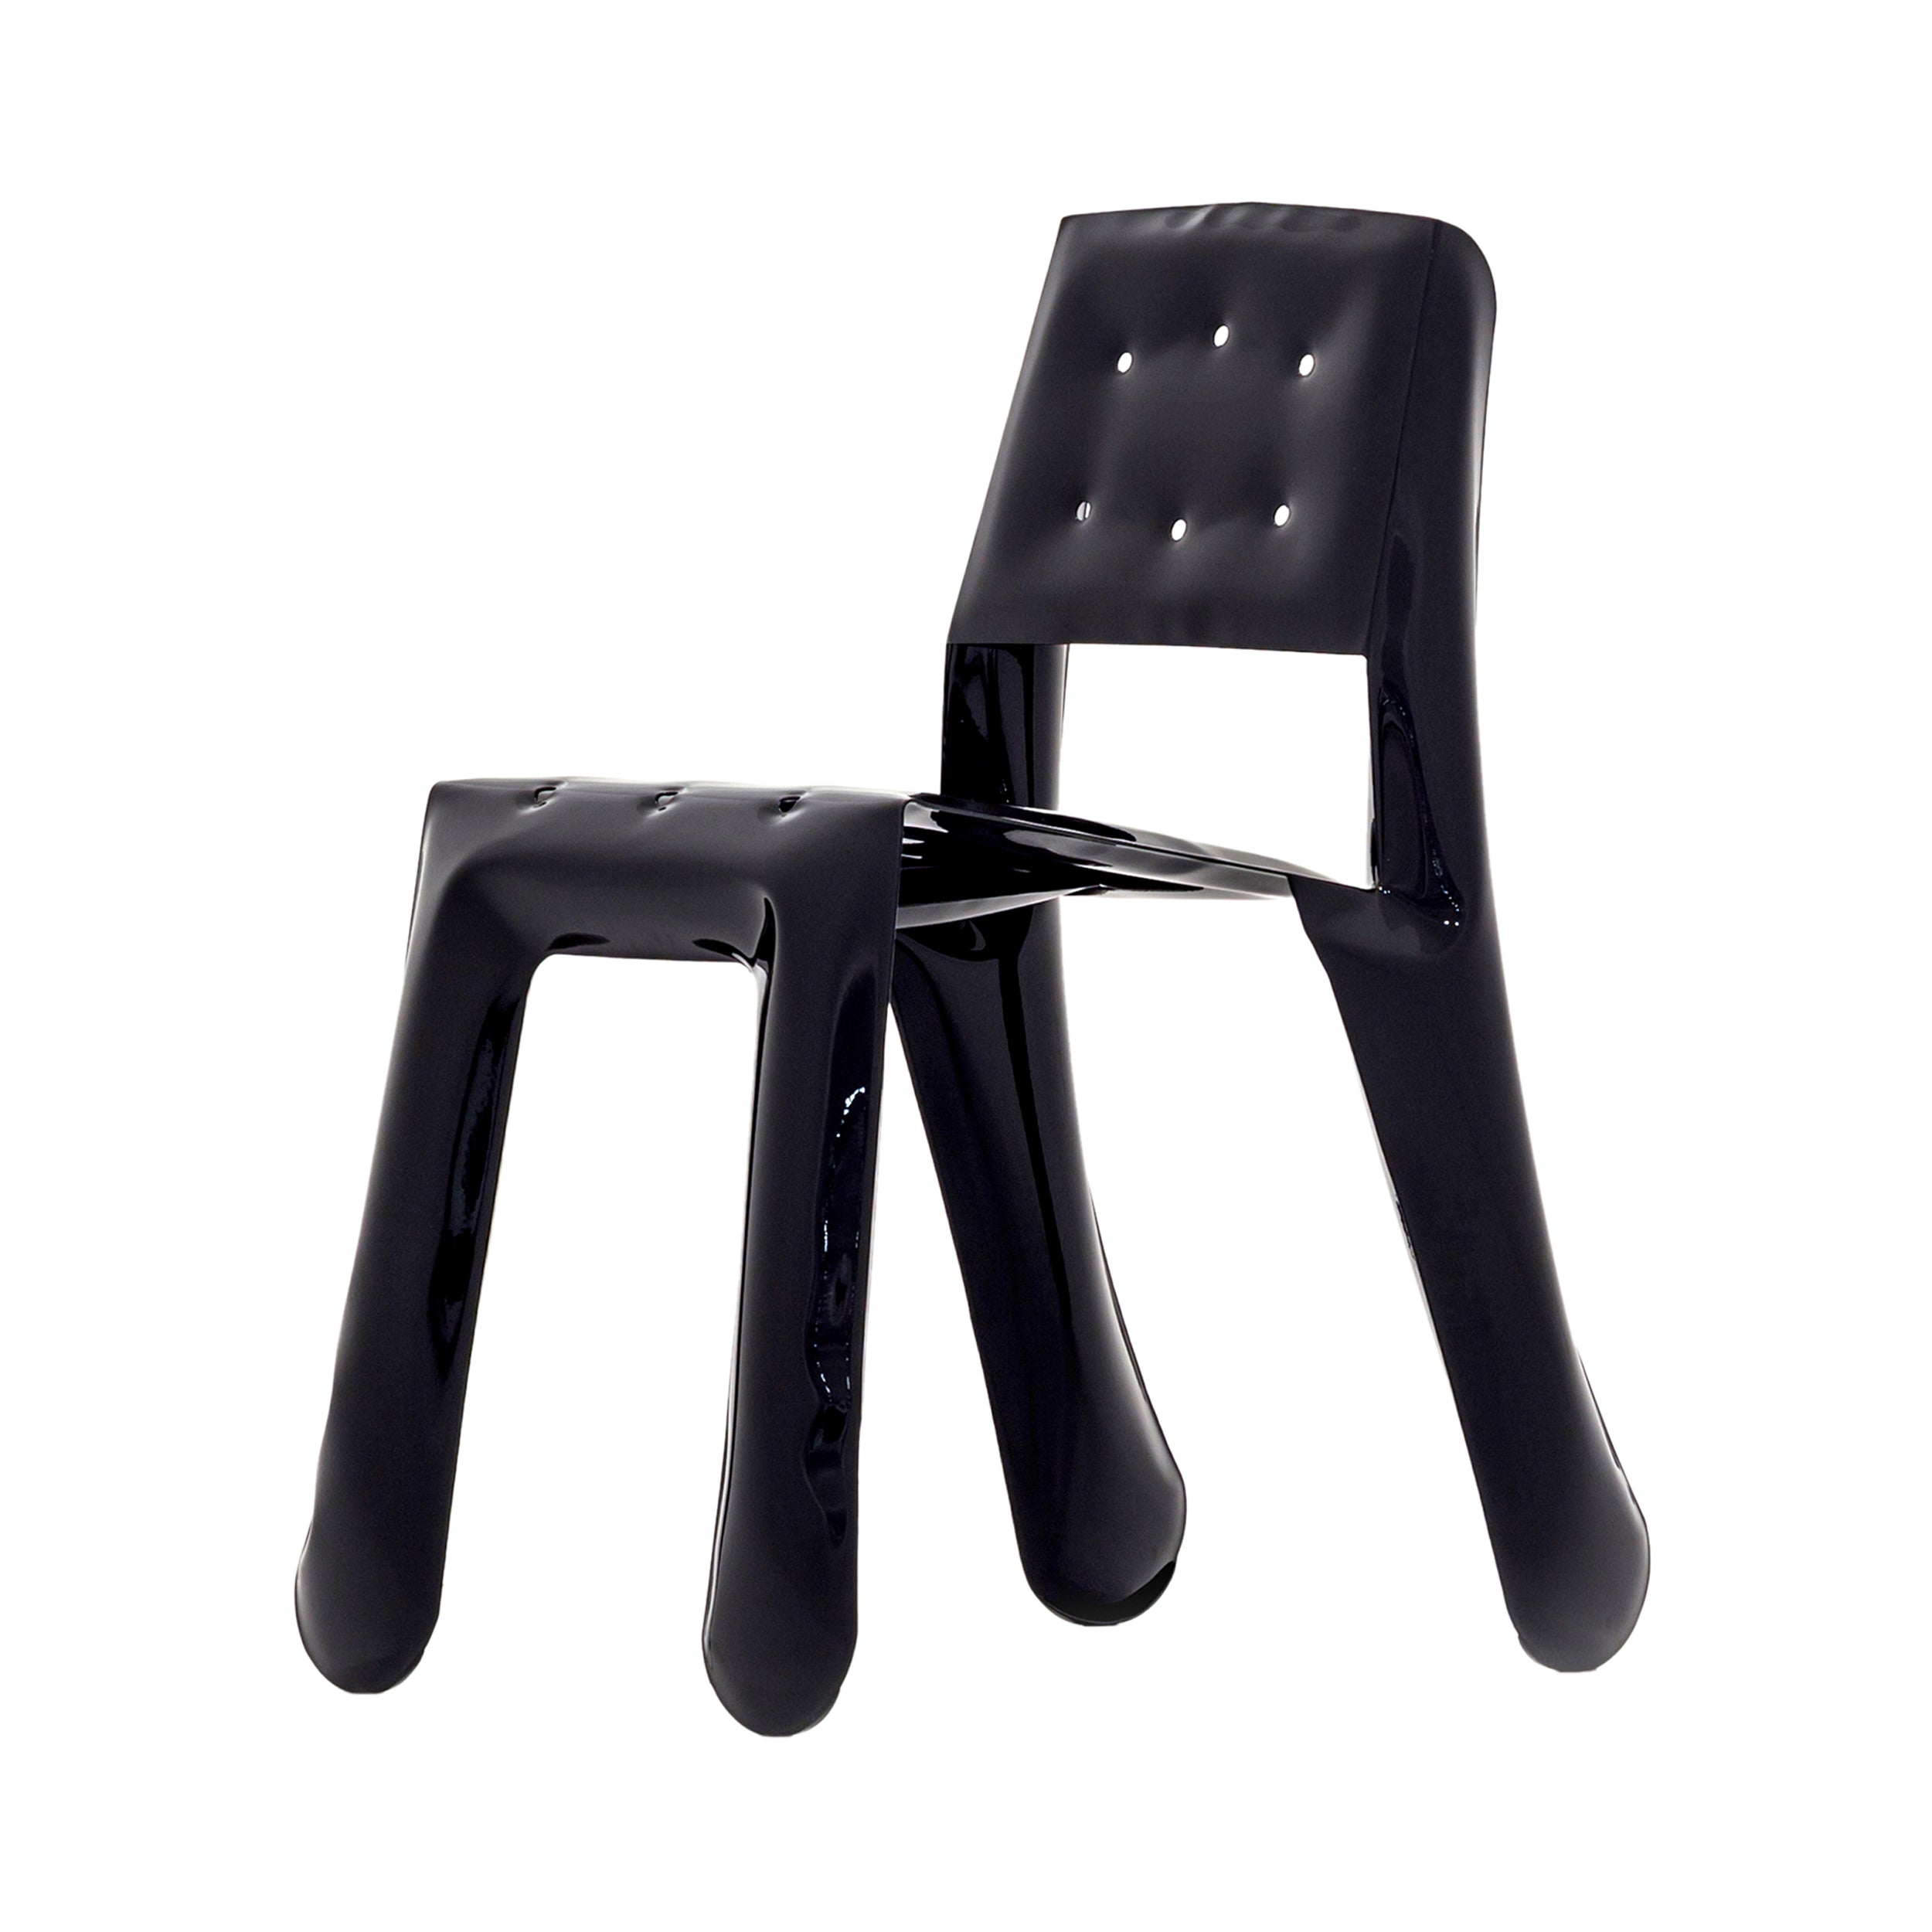 Chippensteel 0.5 Chair: Black Glossy Carbon Steel